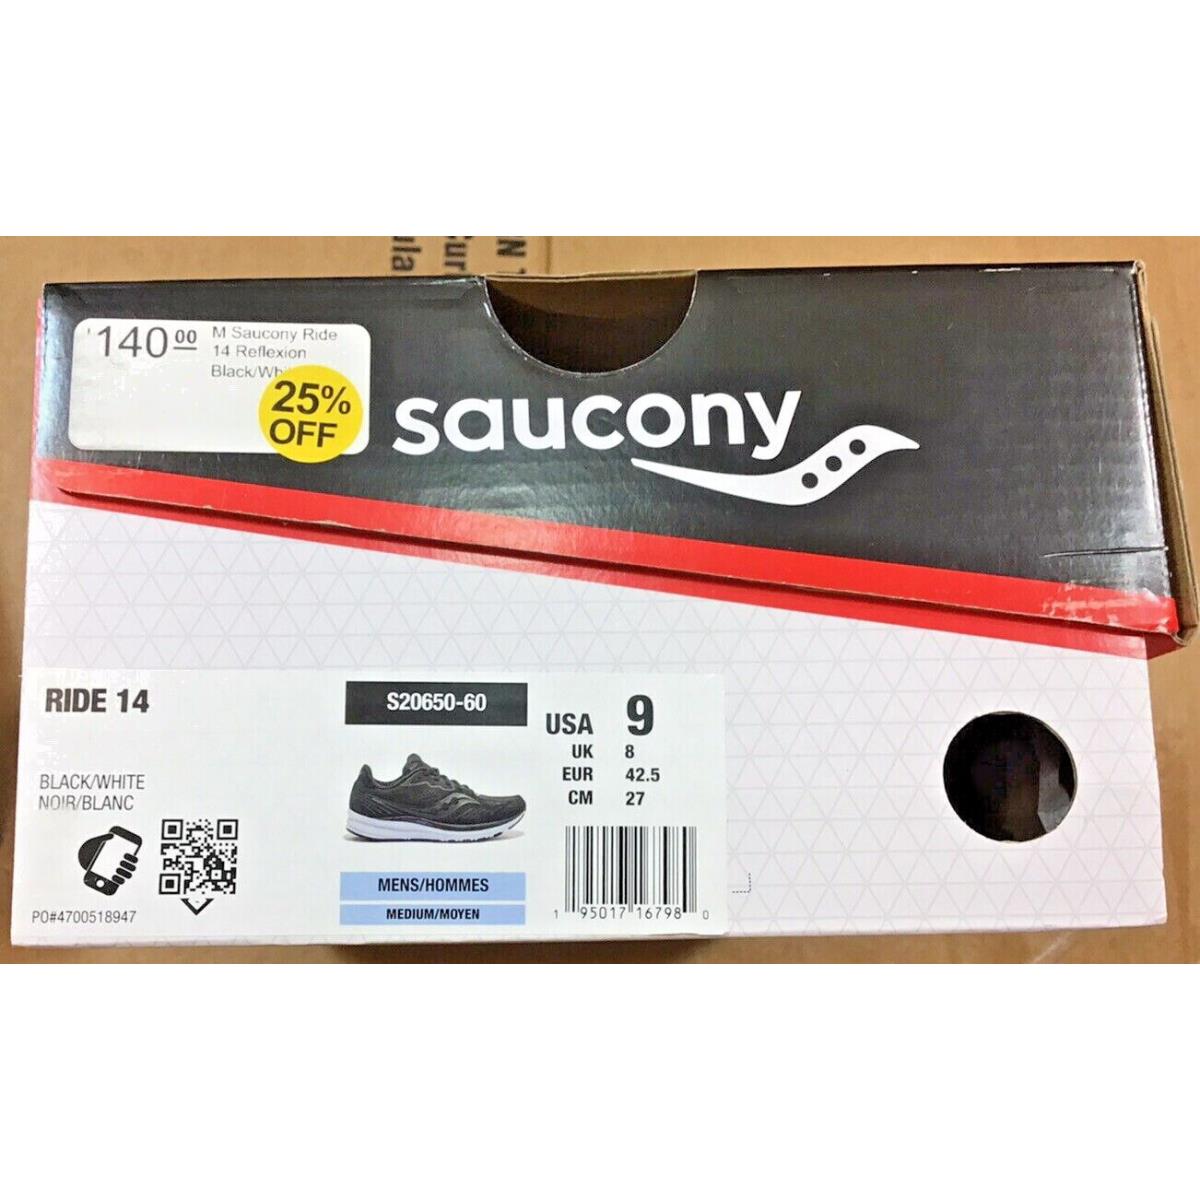 Saucony shoes  - Black/White 4